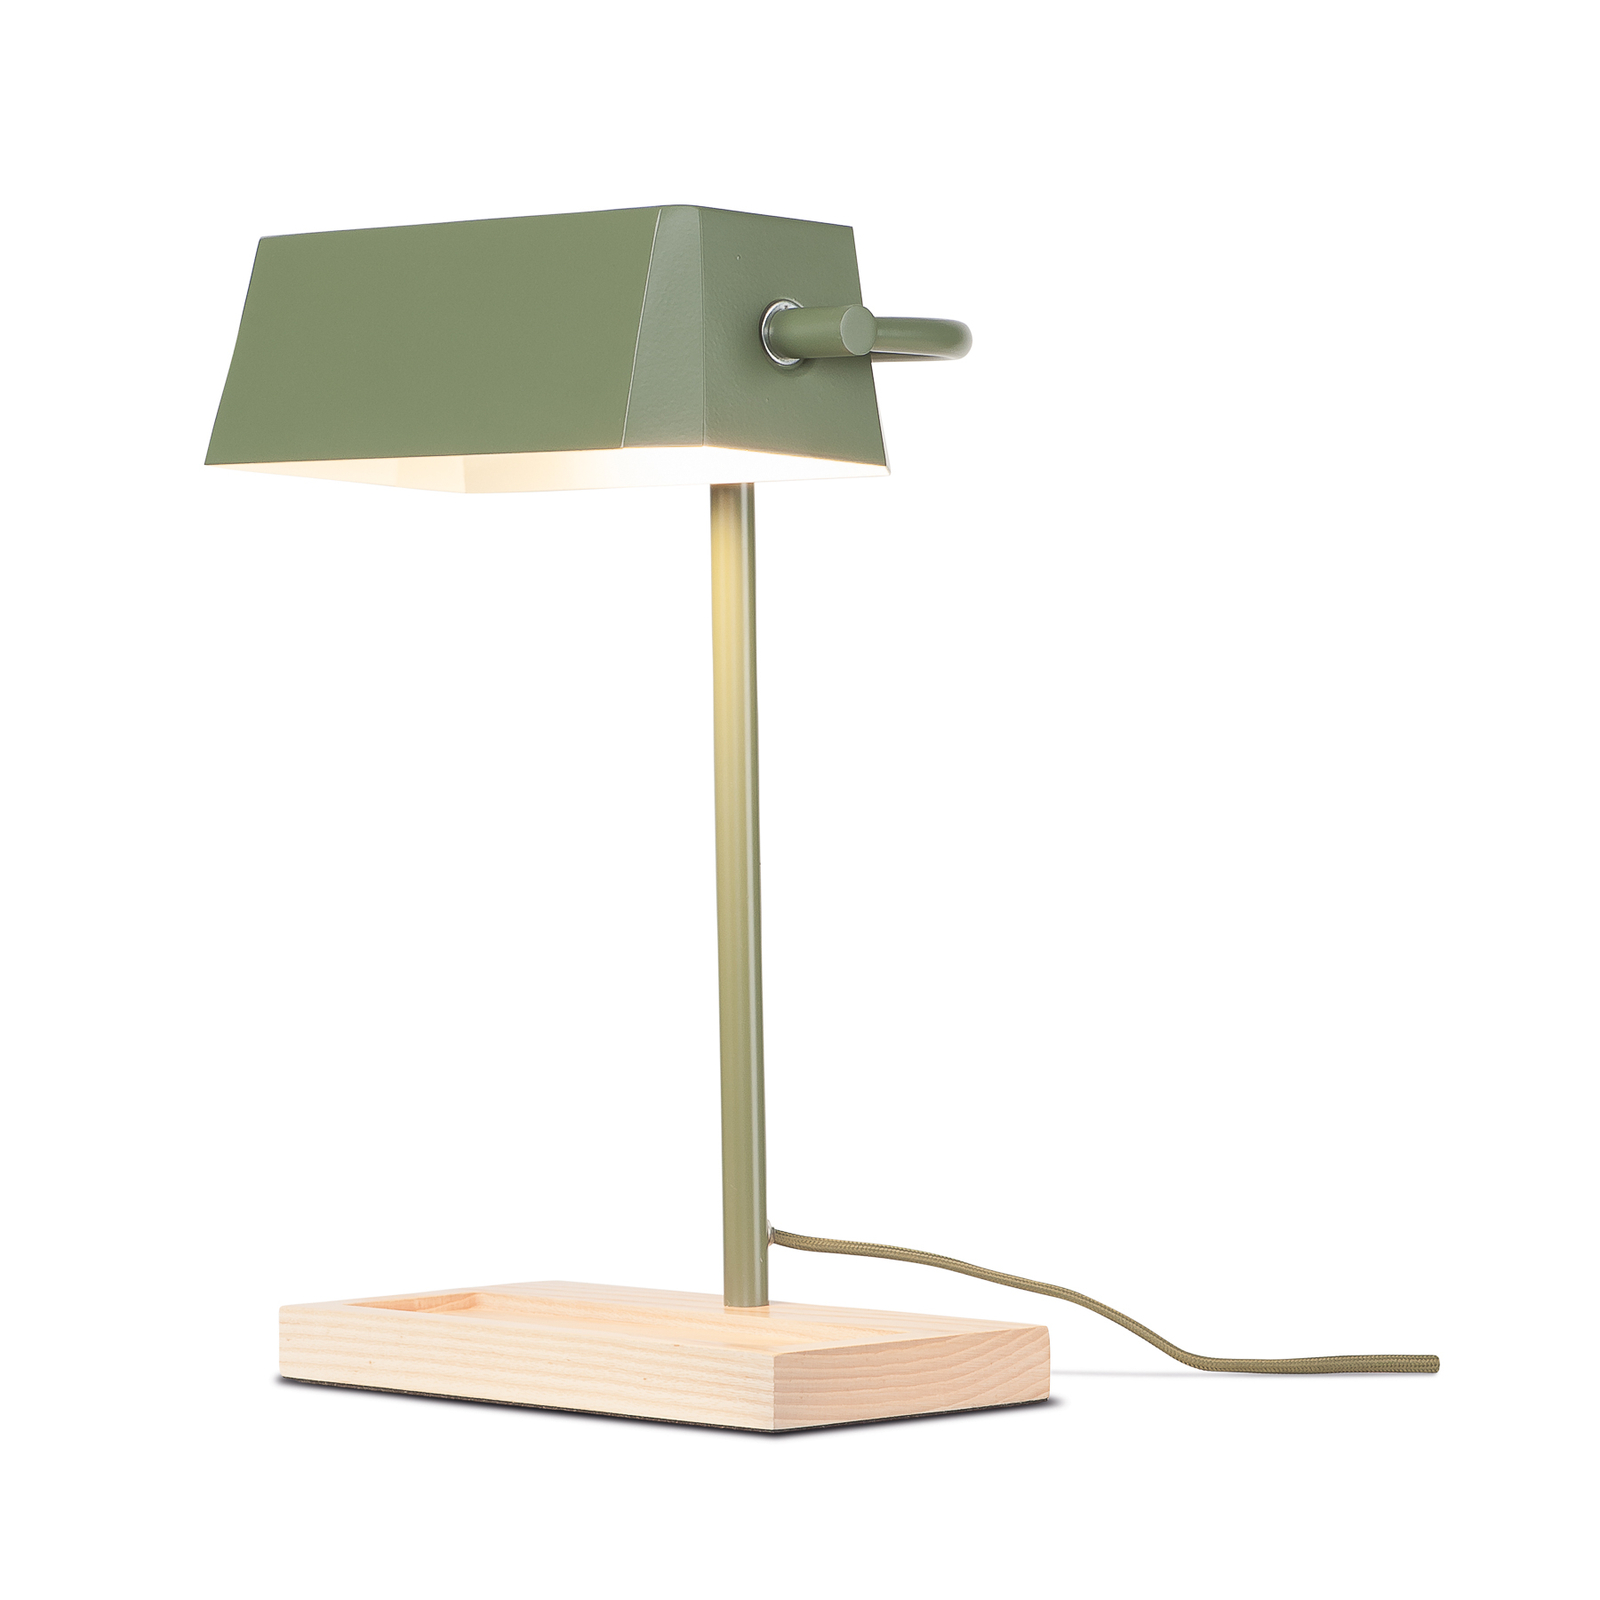 Se trata de la lámpara de mesa RoMi Cambridge, verde oliva